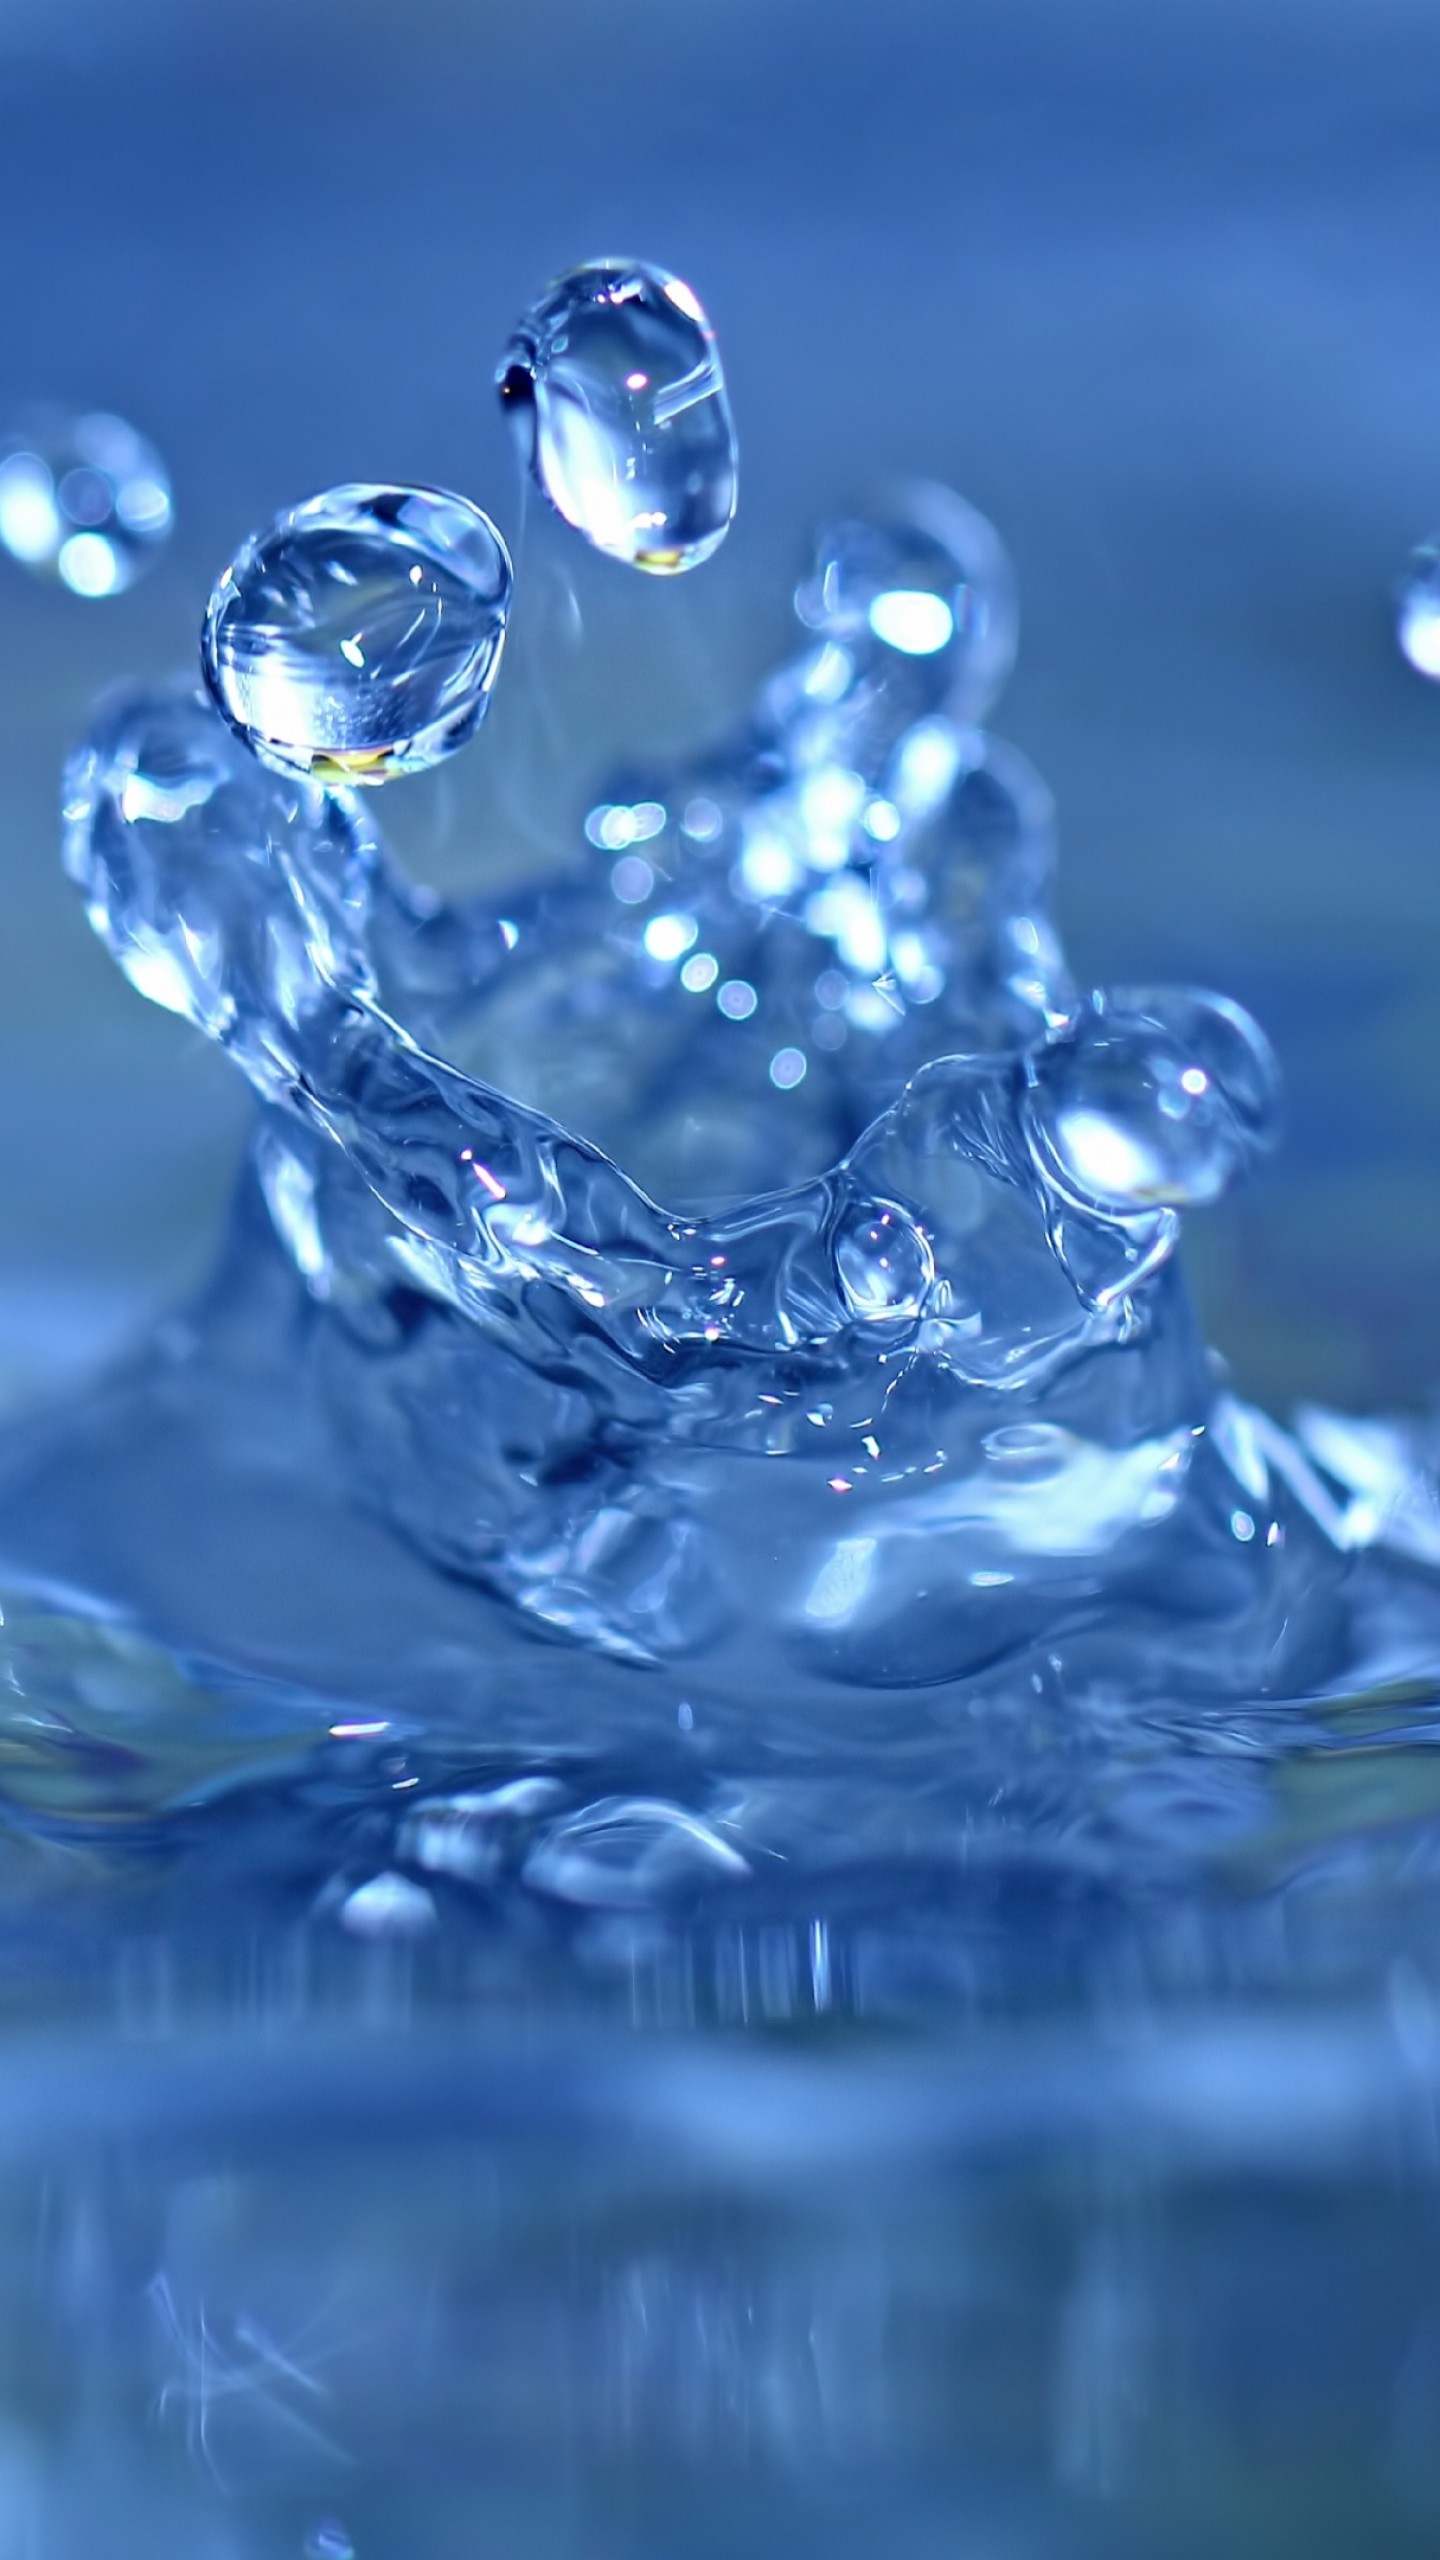 3 cool water drops hd wallpaper,water,blue,drop,water resources,transparent material